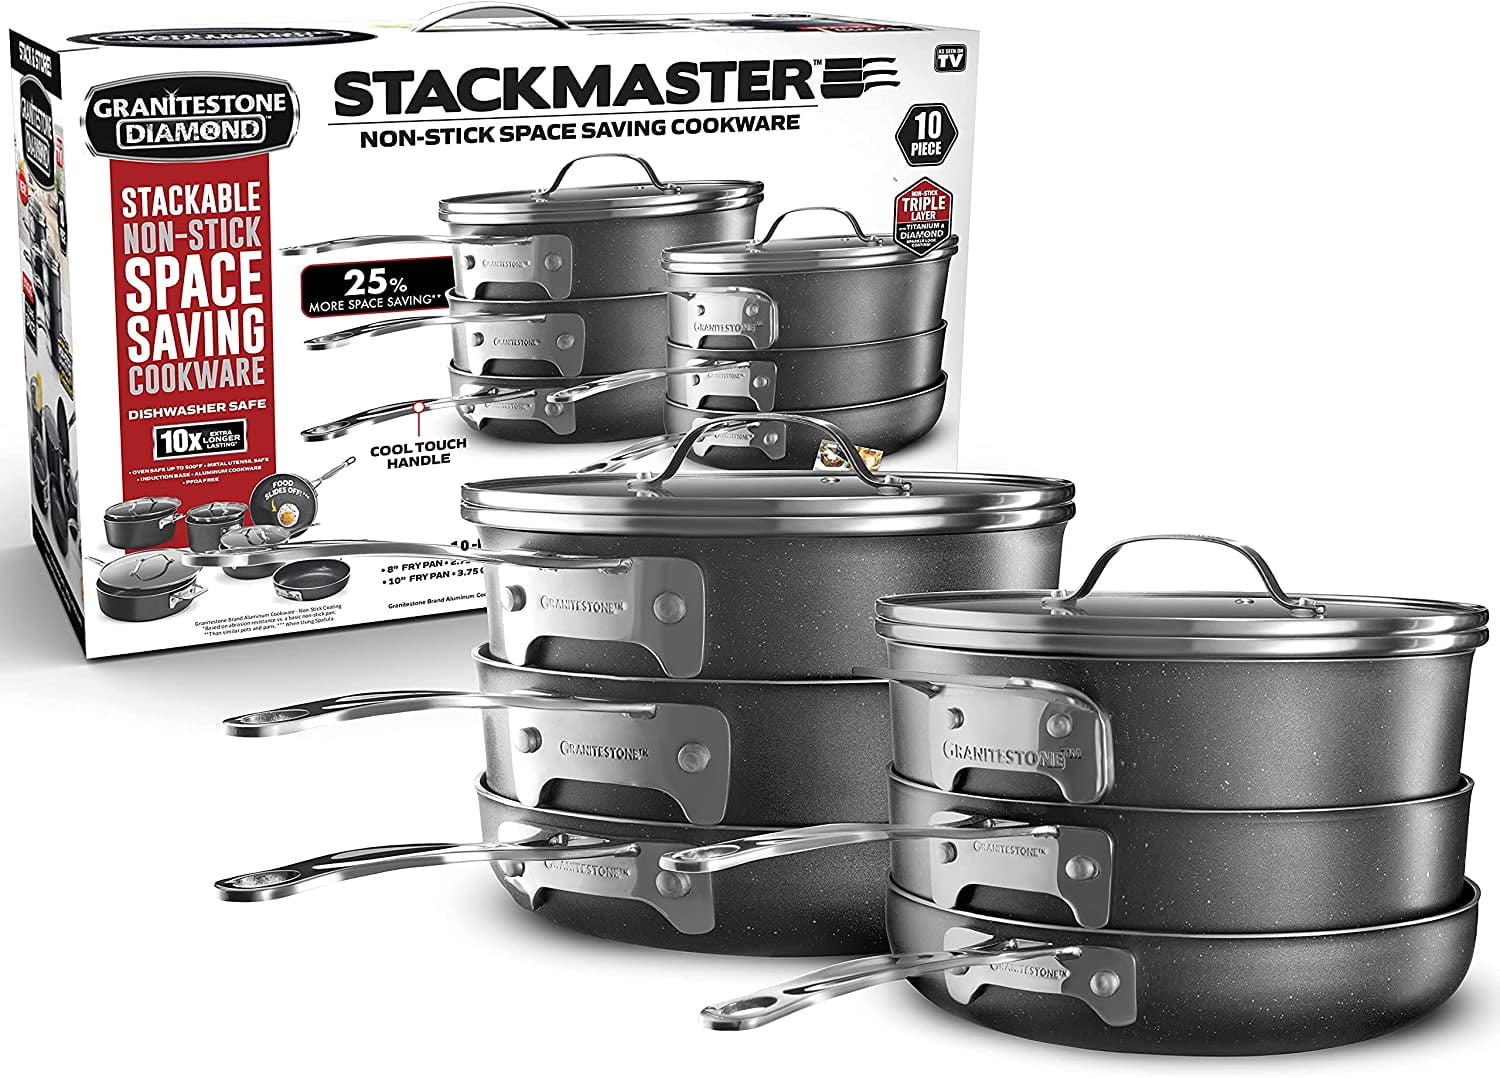 Gotham Steel Stackmaster Stackable Space Saving 10 Piece Aluminum Nonstick  Cookware Set